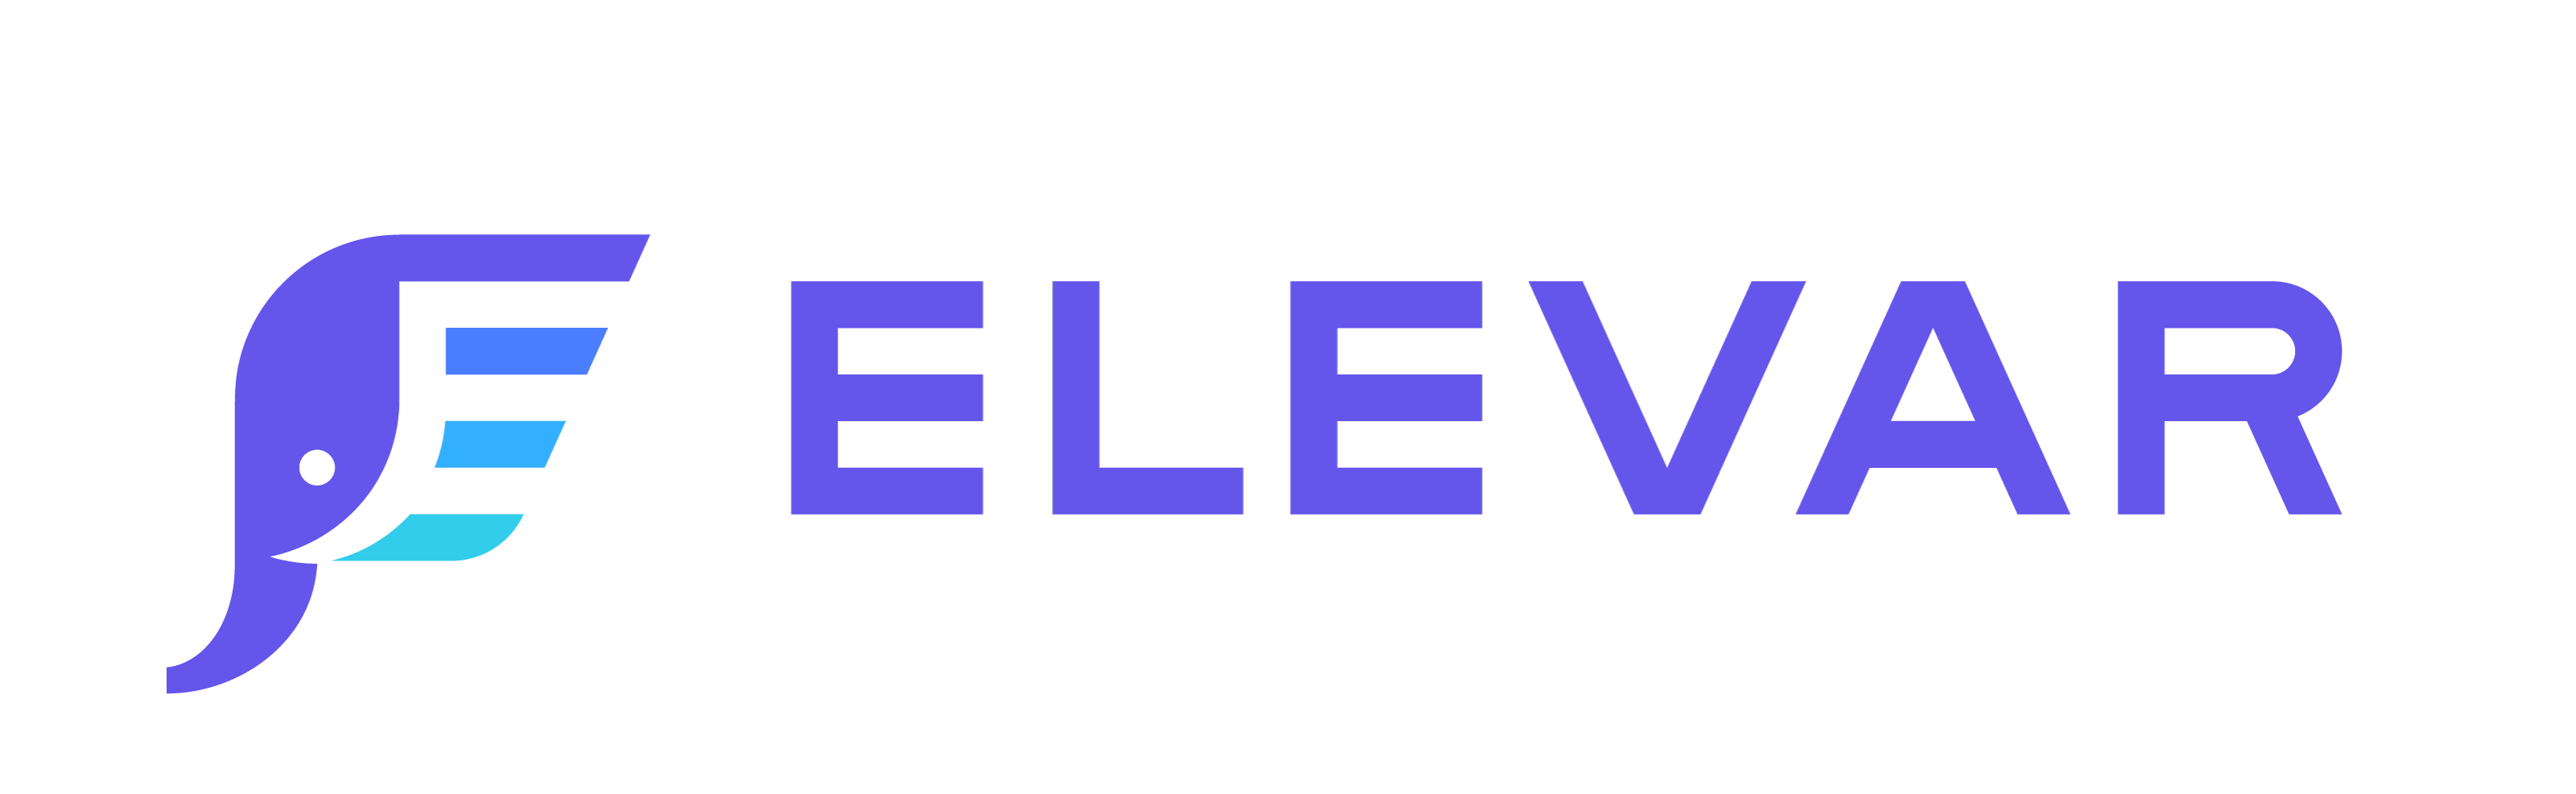 Elevar_Logo_Horizontal